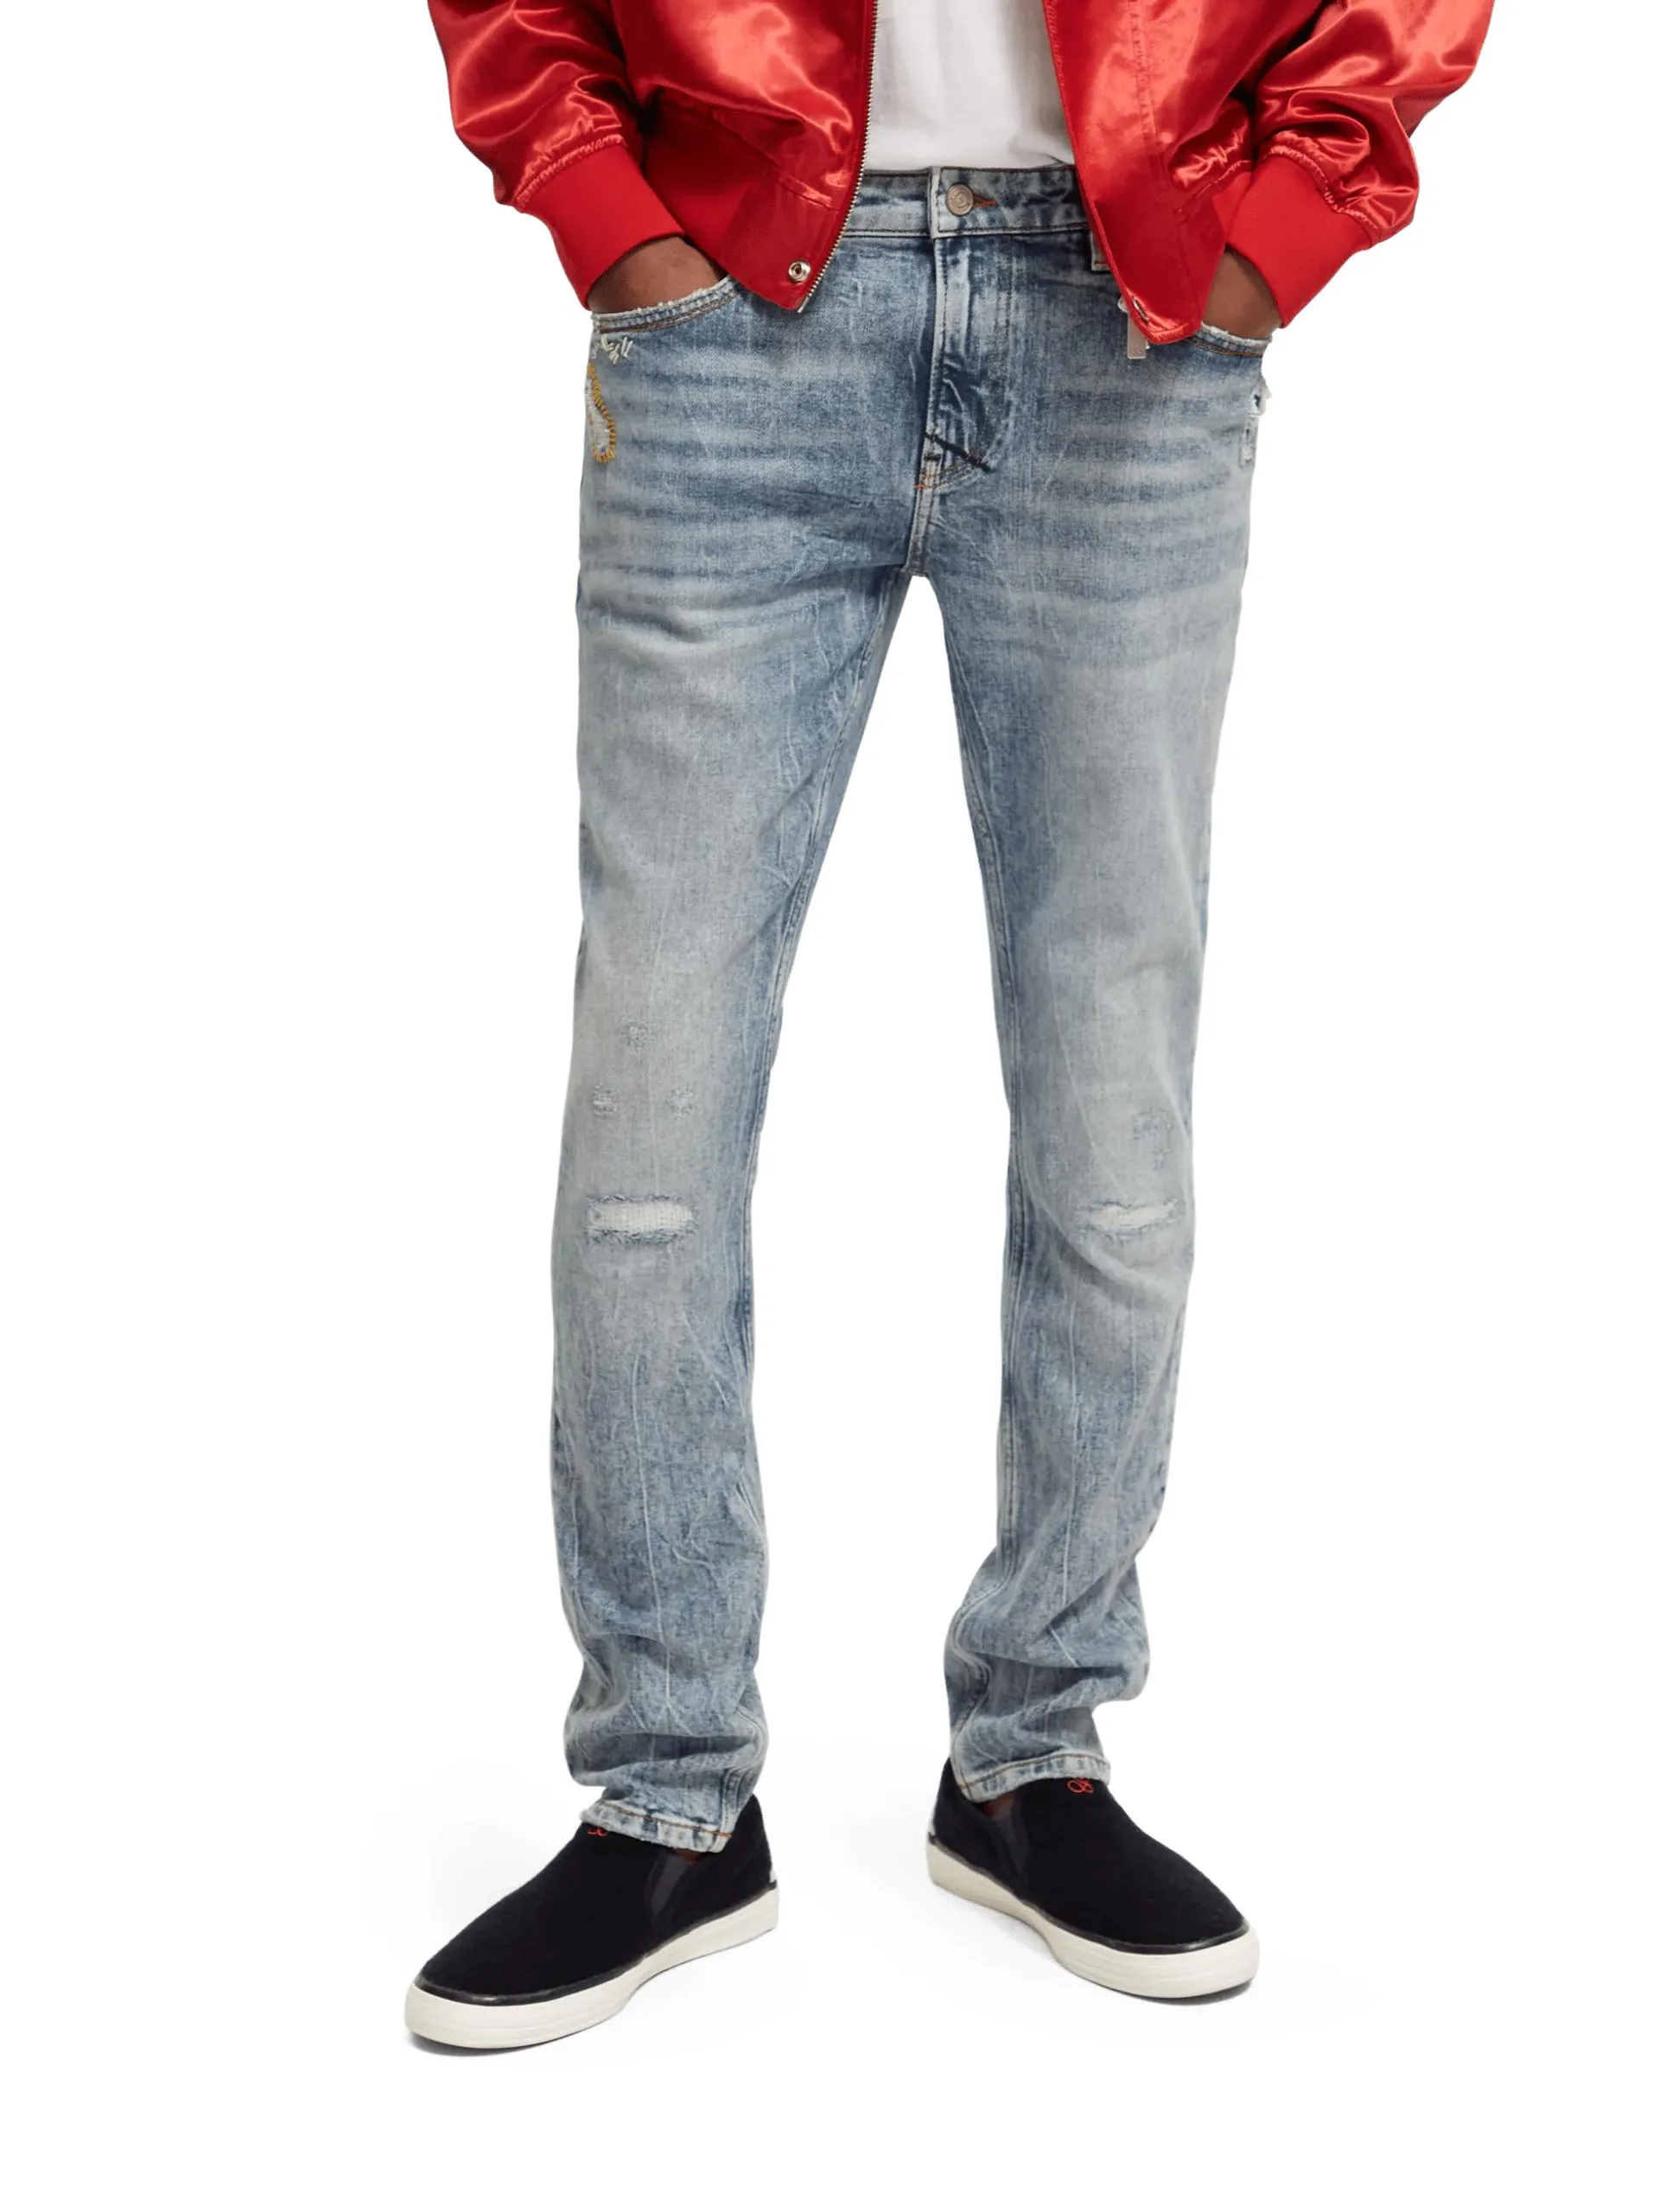 The Skim super-slim fit jeans